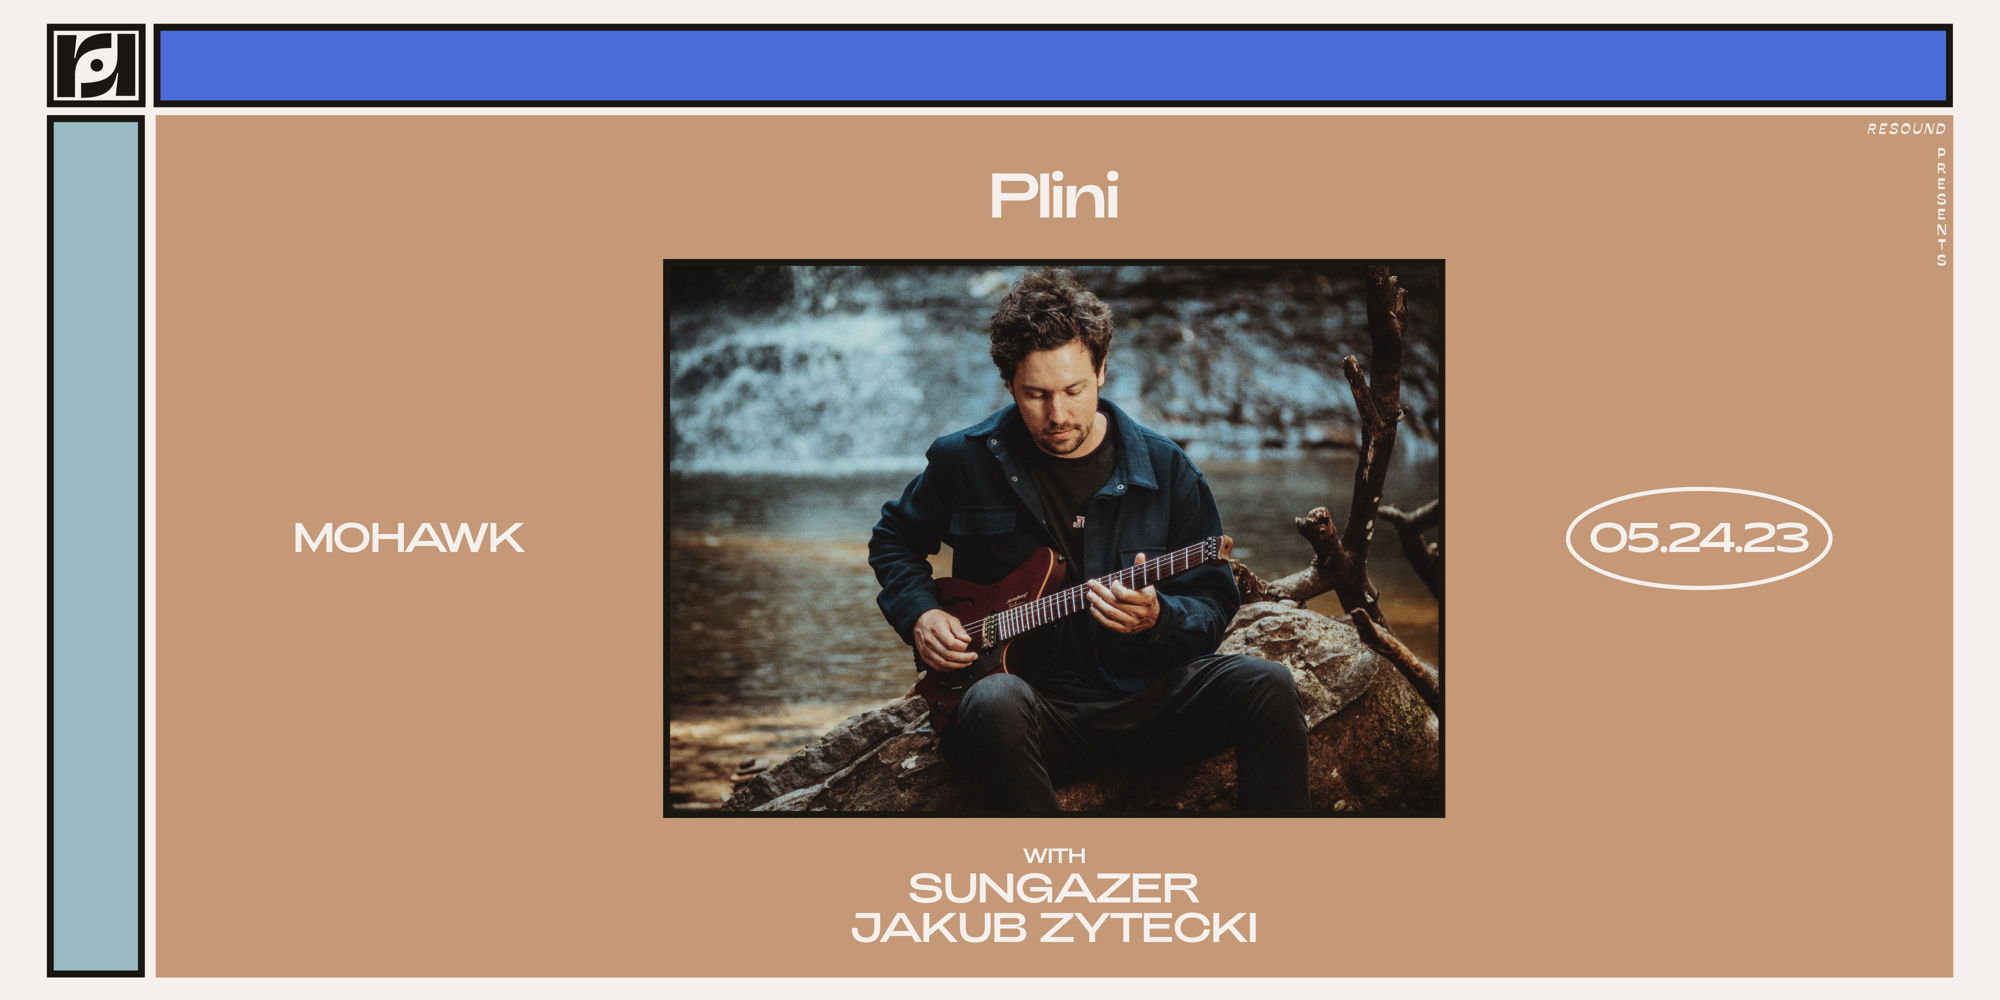 Resound Presents: Plini w/ Sungazer and Jacob Zytecki at Mohawk on 5/24/23 promotional image